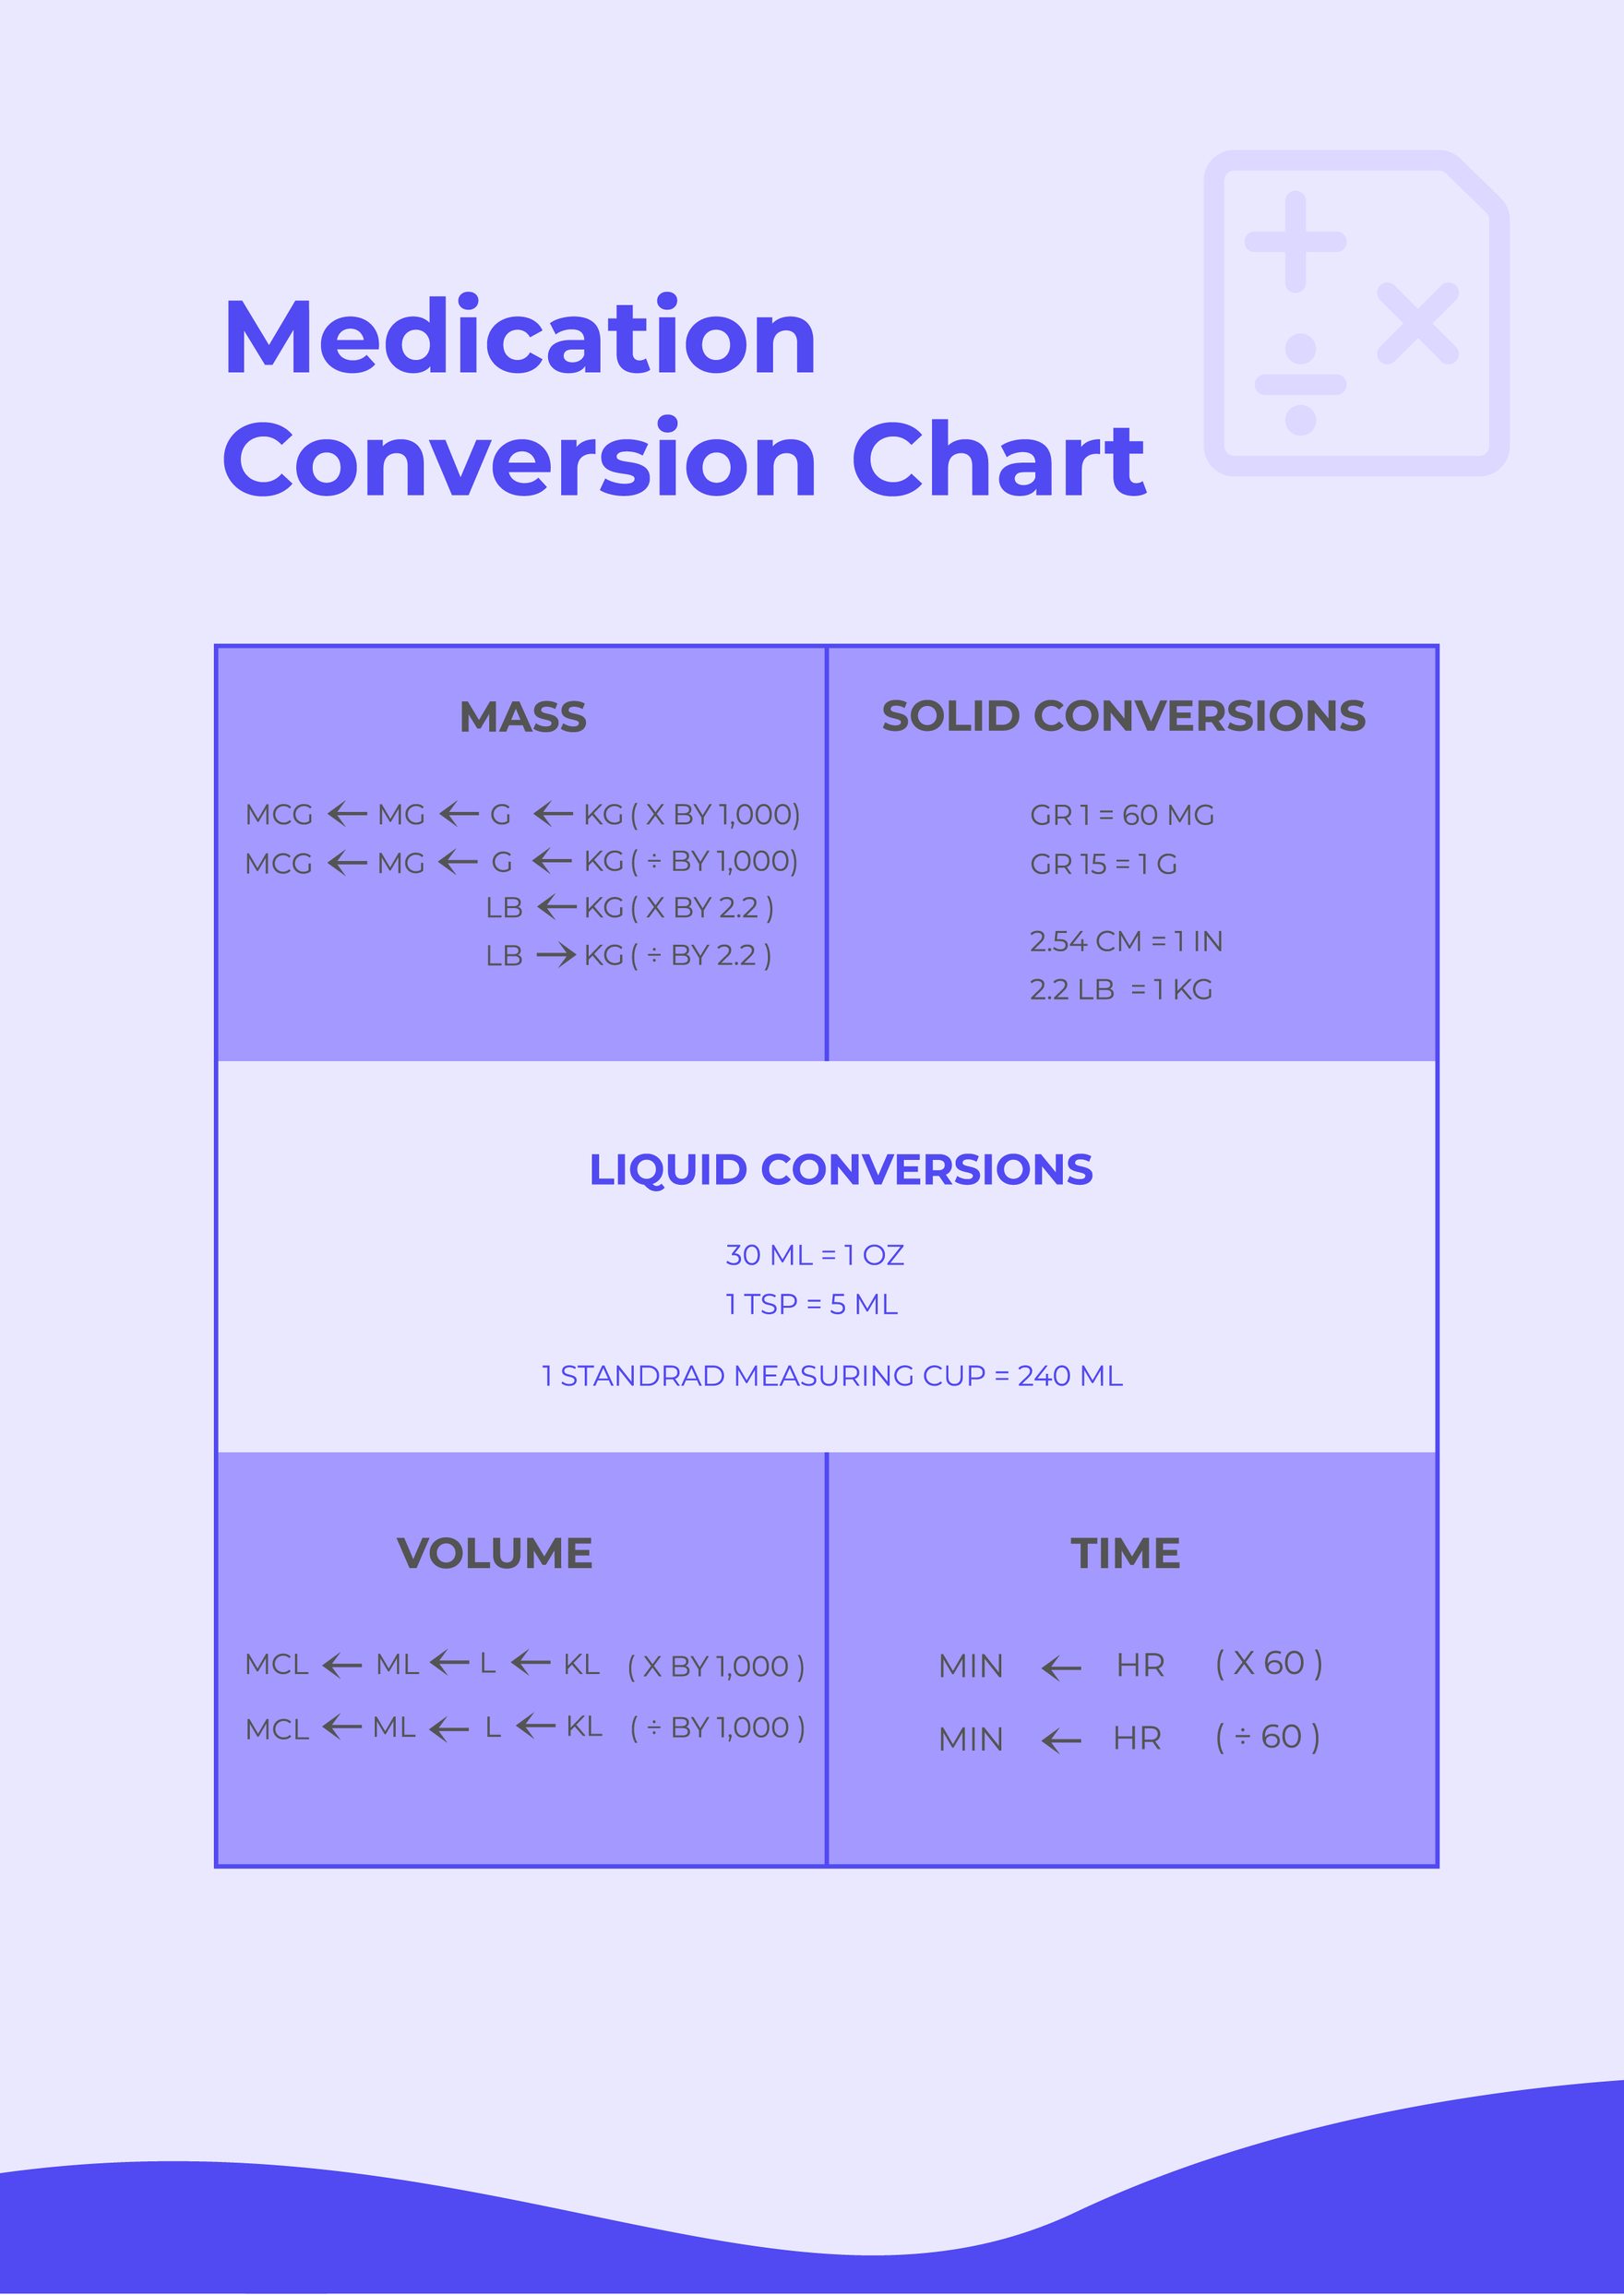 Medication Conversion Chart in Illustrator, PDF Download